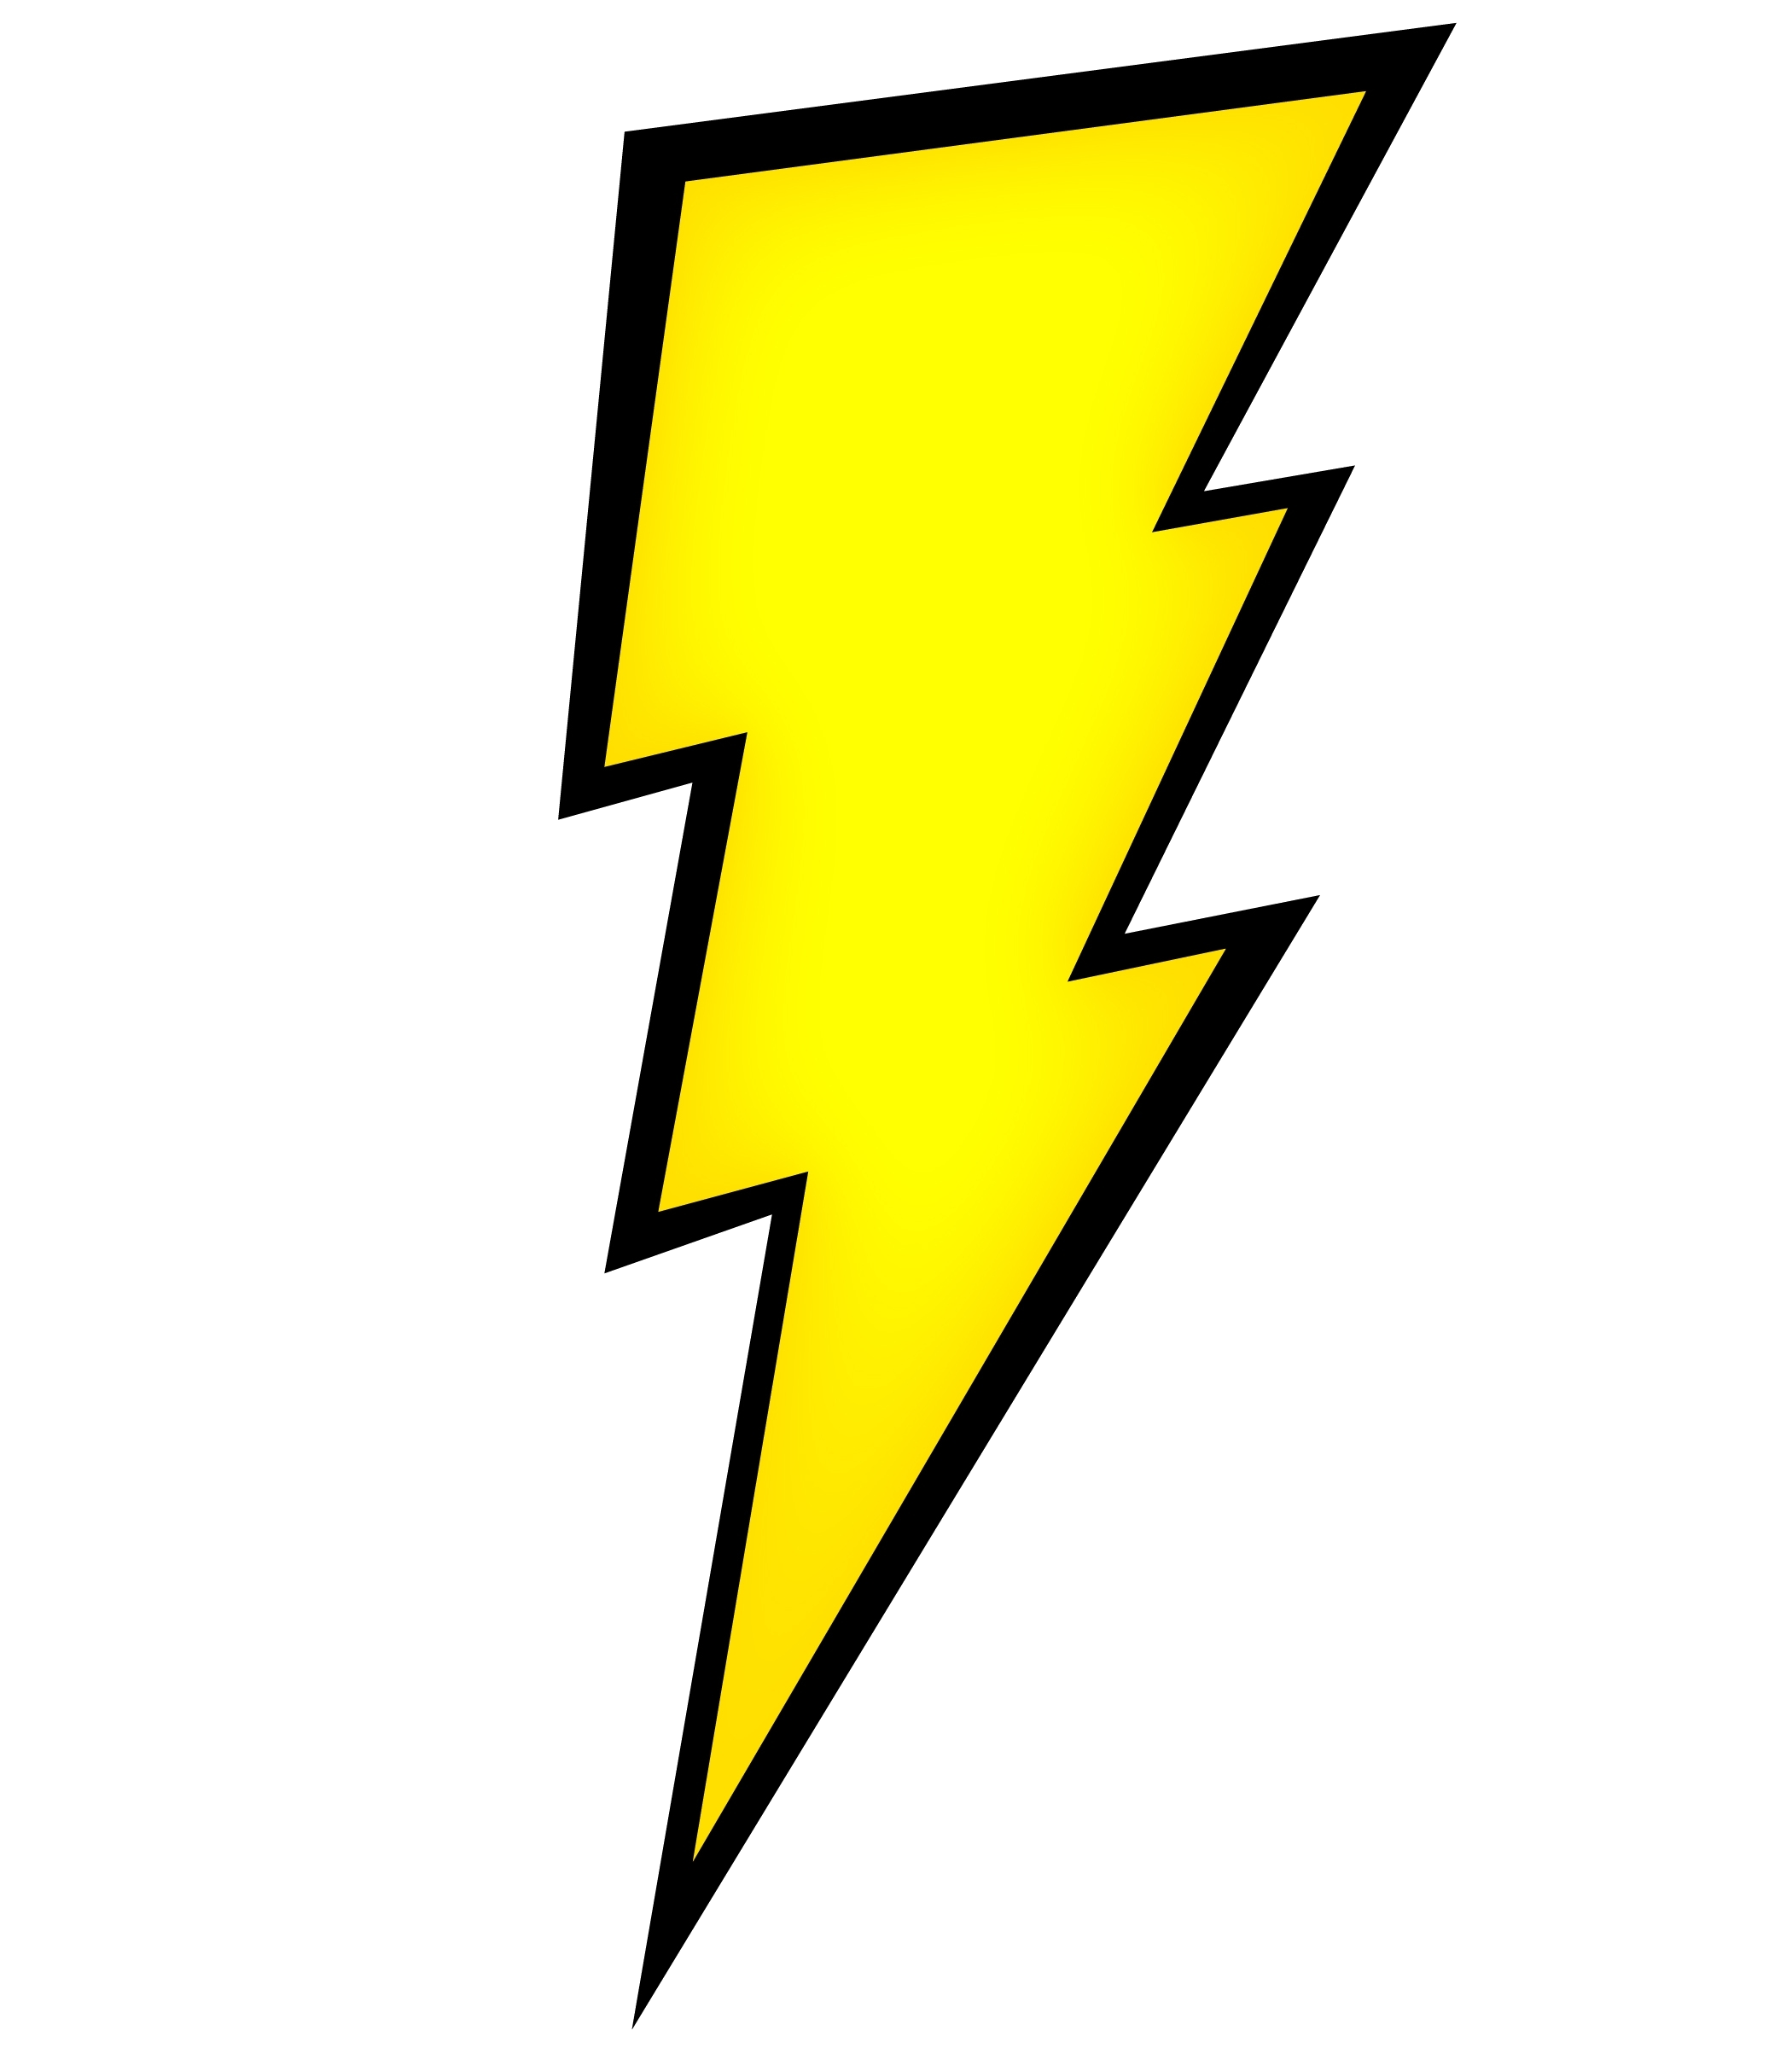 Zeus Lightning Cloud Clip art - Lightning icon PNG png download - 2100*2400  - Free Transparent Lightning png Download. - Clip Art Library